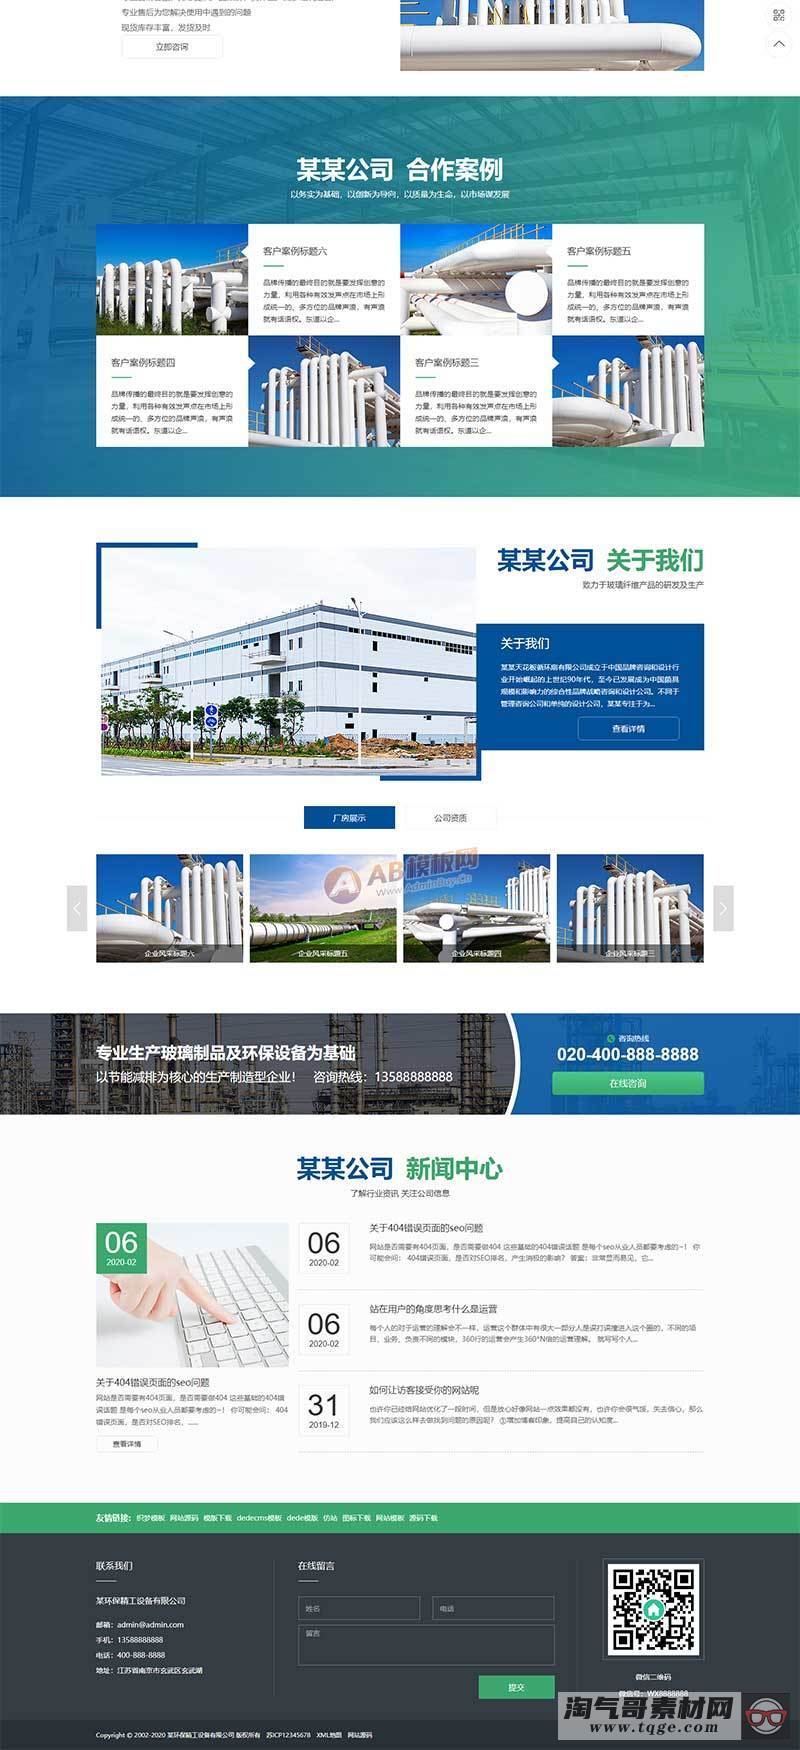 (PC+WAP)蓝色玻璃纤维制品网站pbootcms模板 营销型环保设备网站源码下载